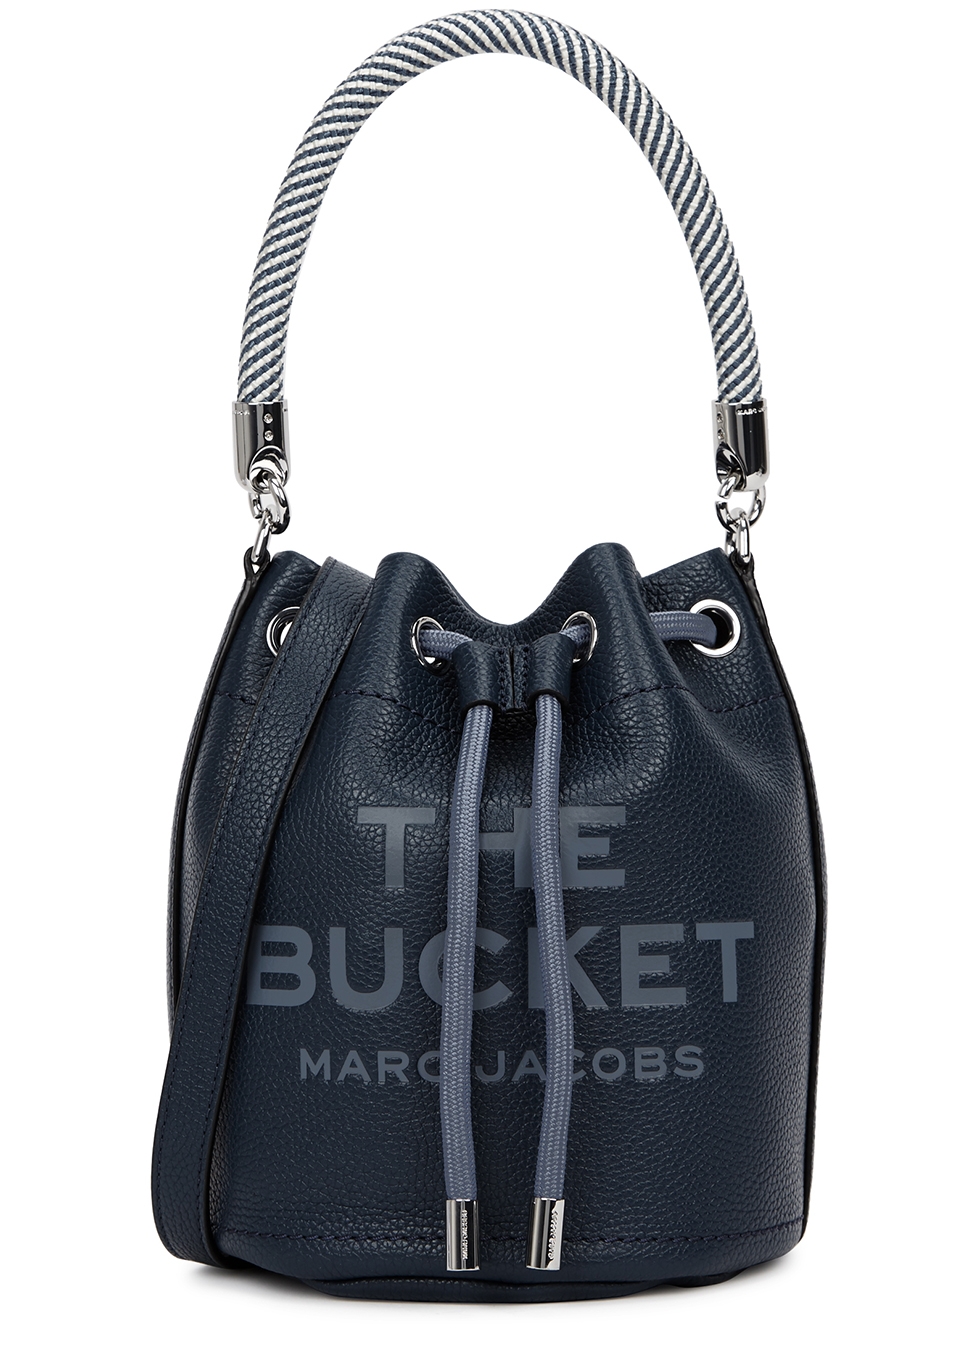 Marc Jacobs The Bucket grained leather bucket bag